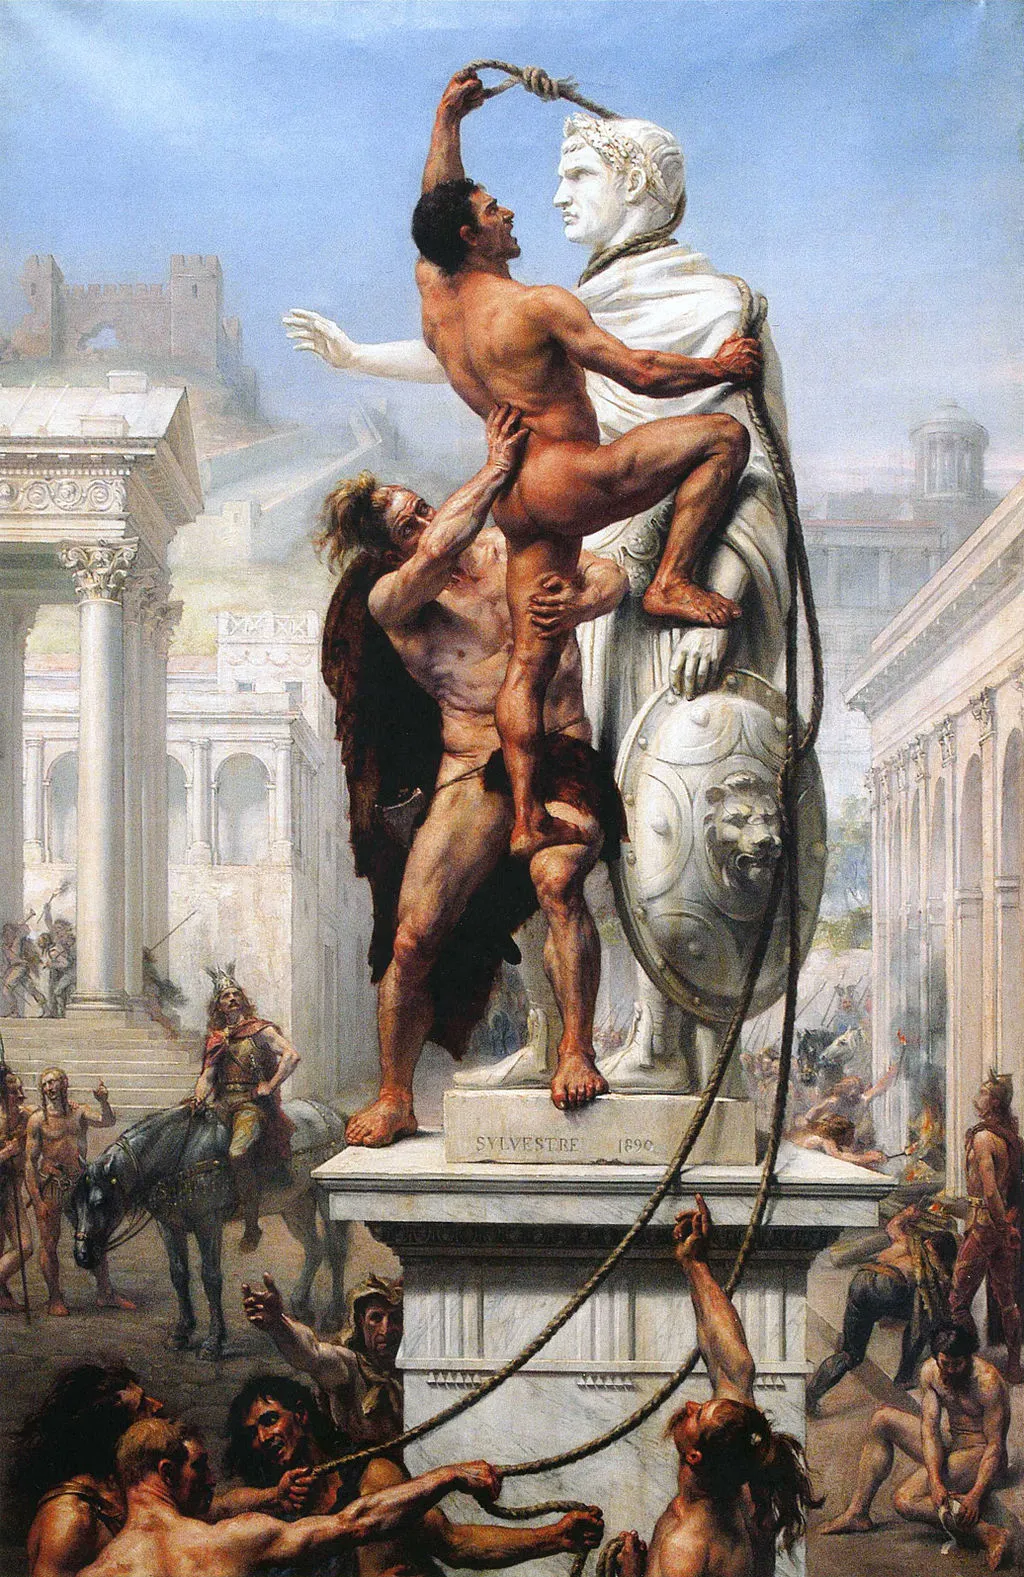 Joseph-Noël Sylvestre's 1890 painting of the sack of Rome